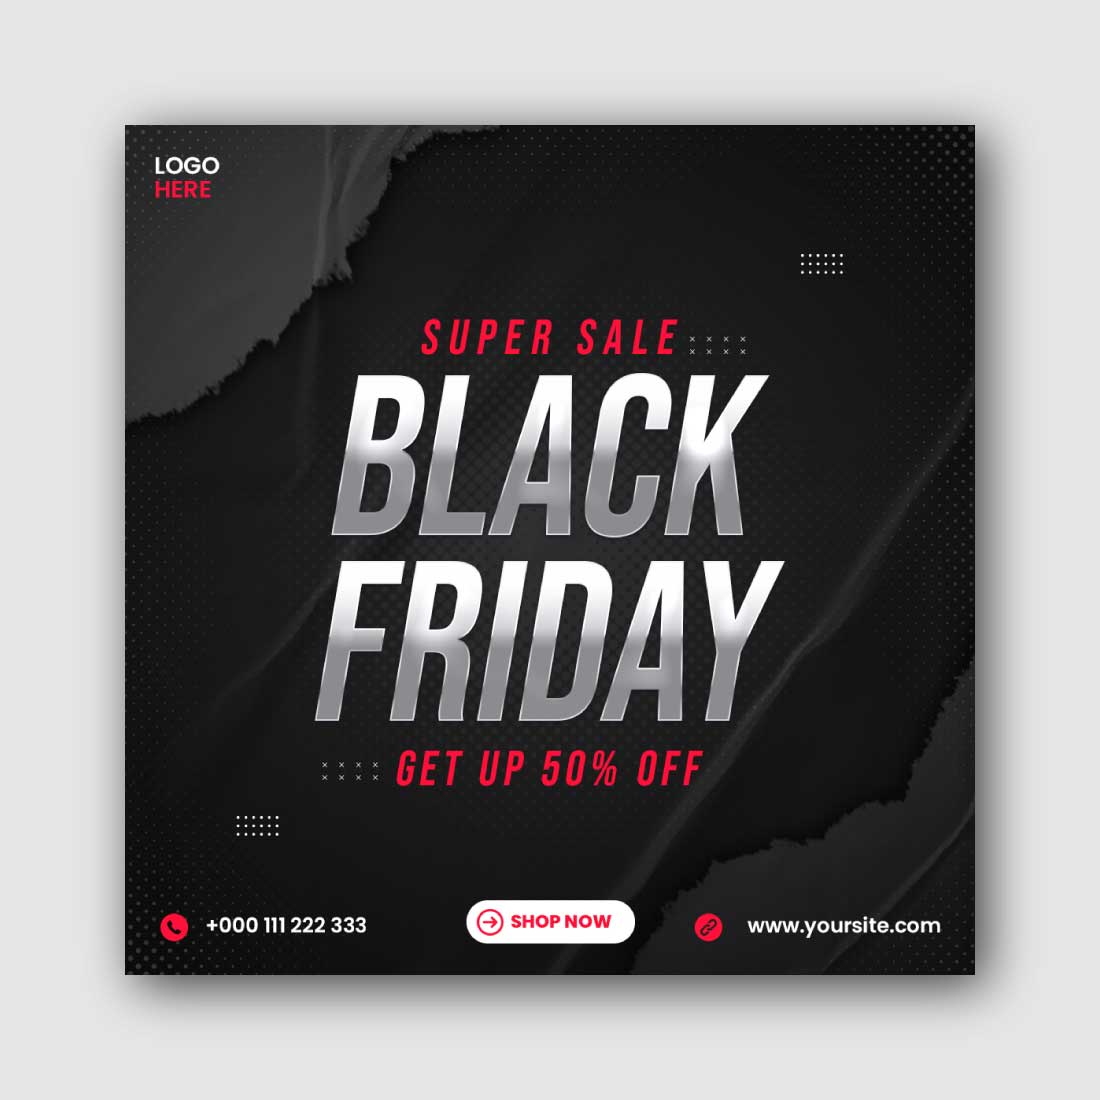 Black Friday Sale Social Media Instagram Post Template cover image.